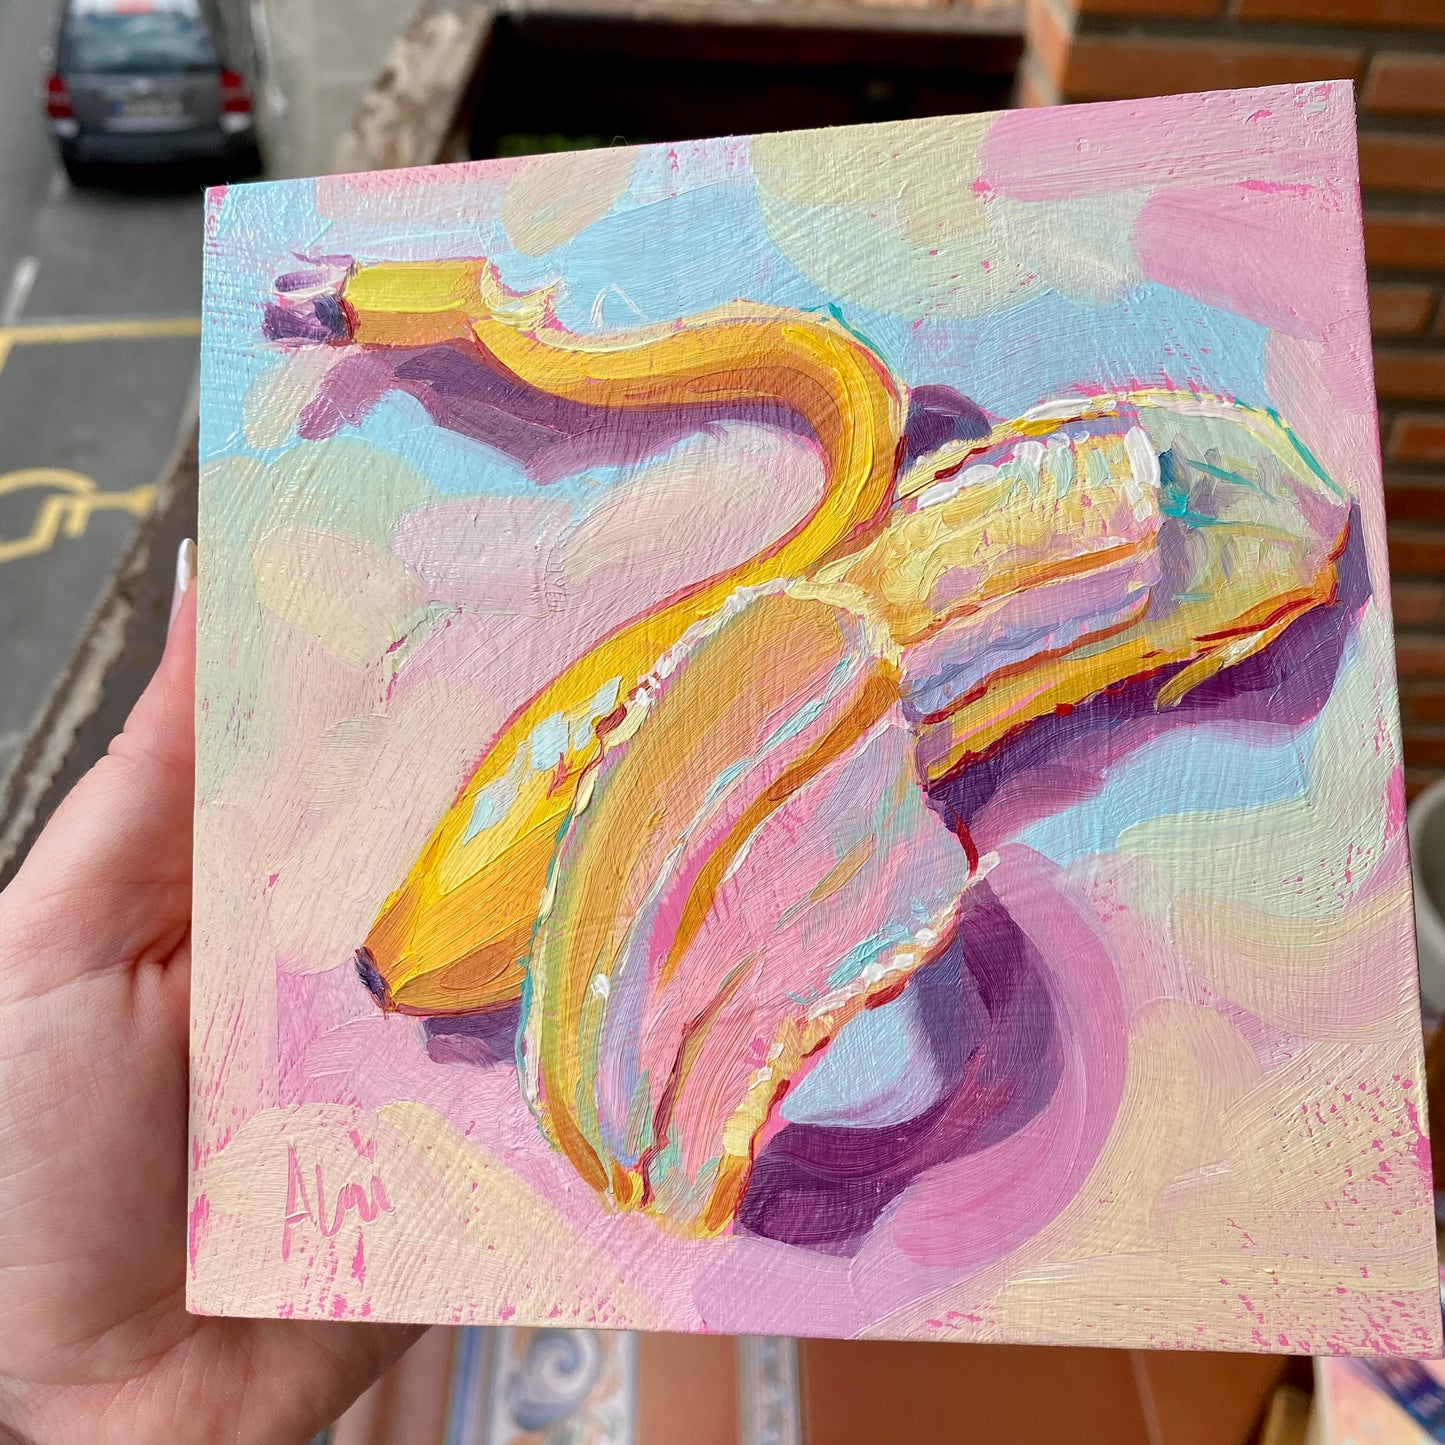 Bitten banana - Original Oil Painting